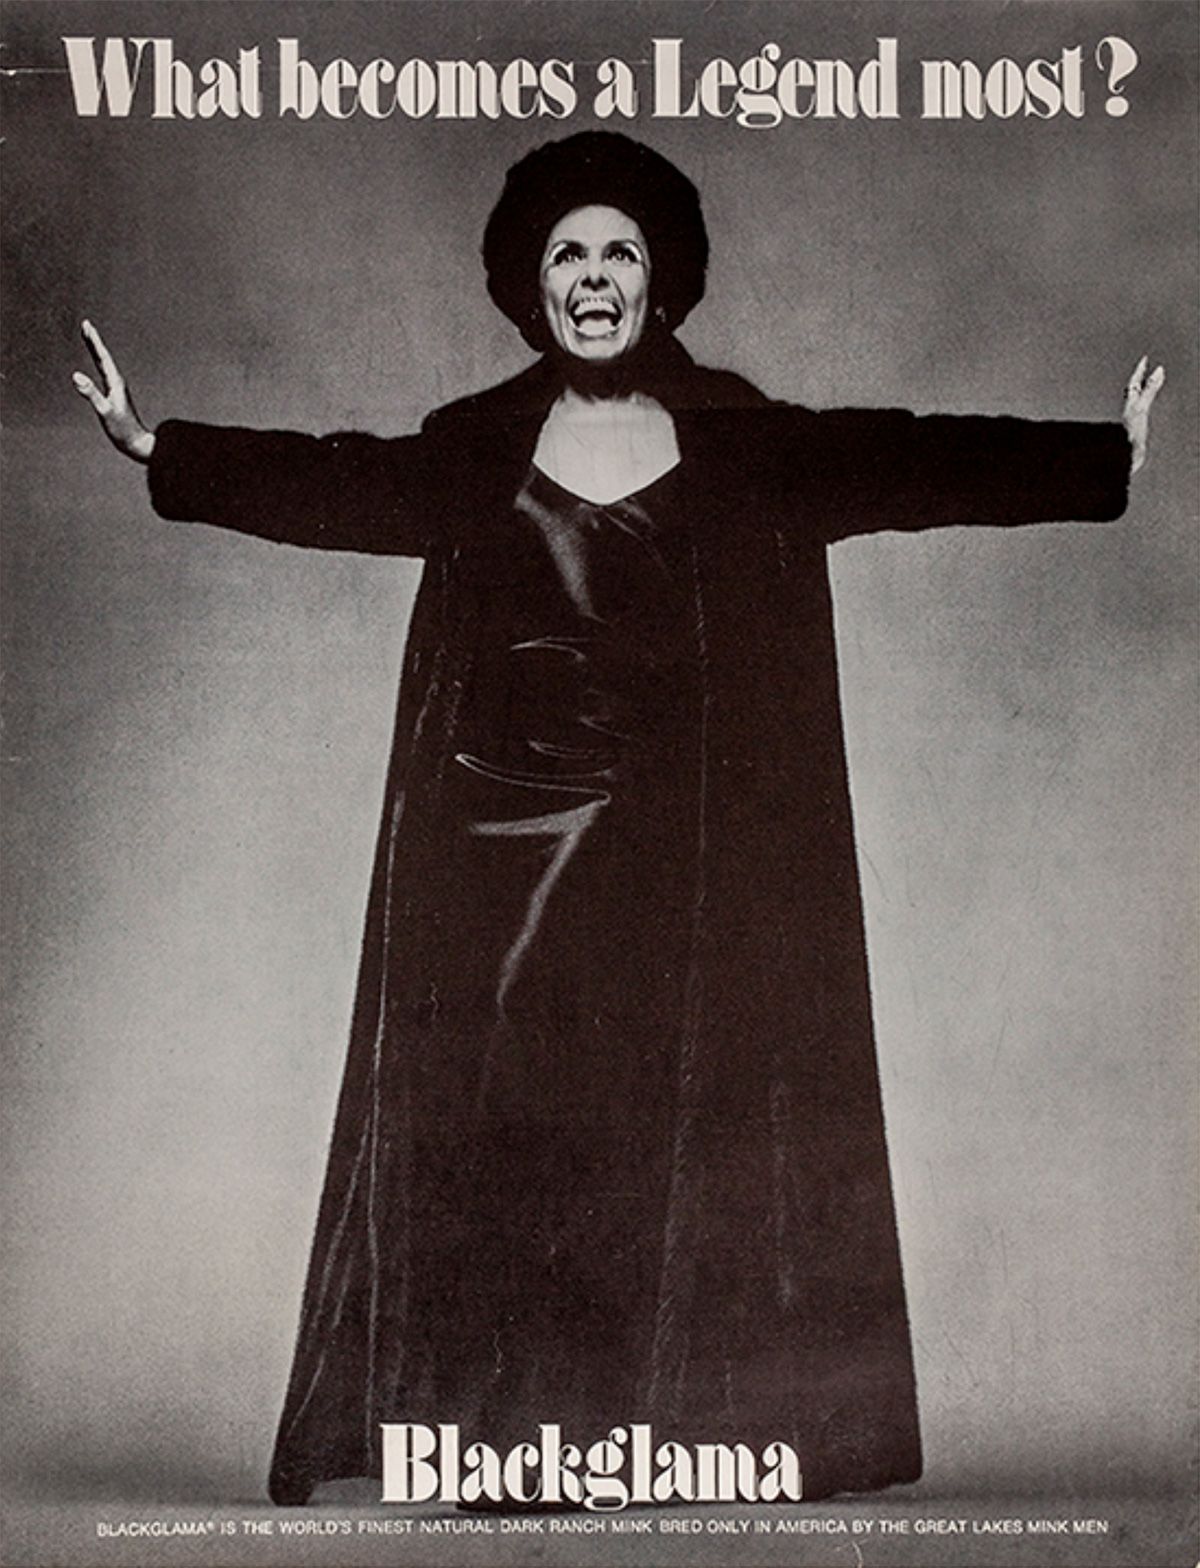 Walter Film: Lena Horne - 1969 Blackglama Ad Campaign